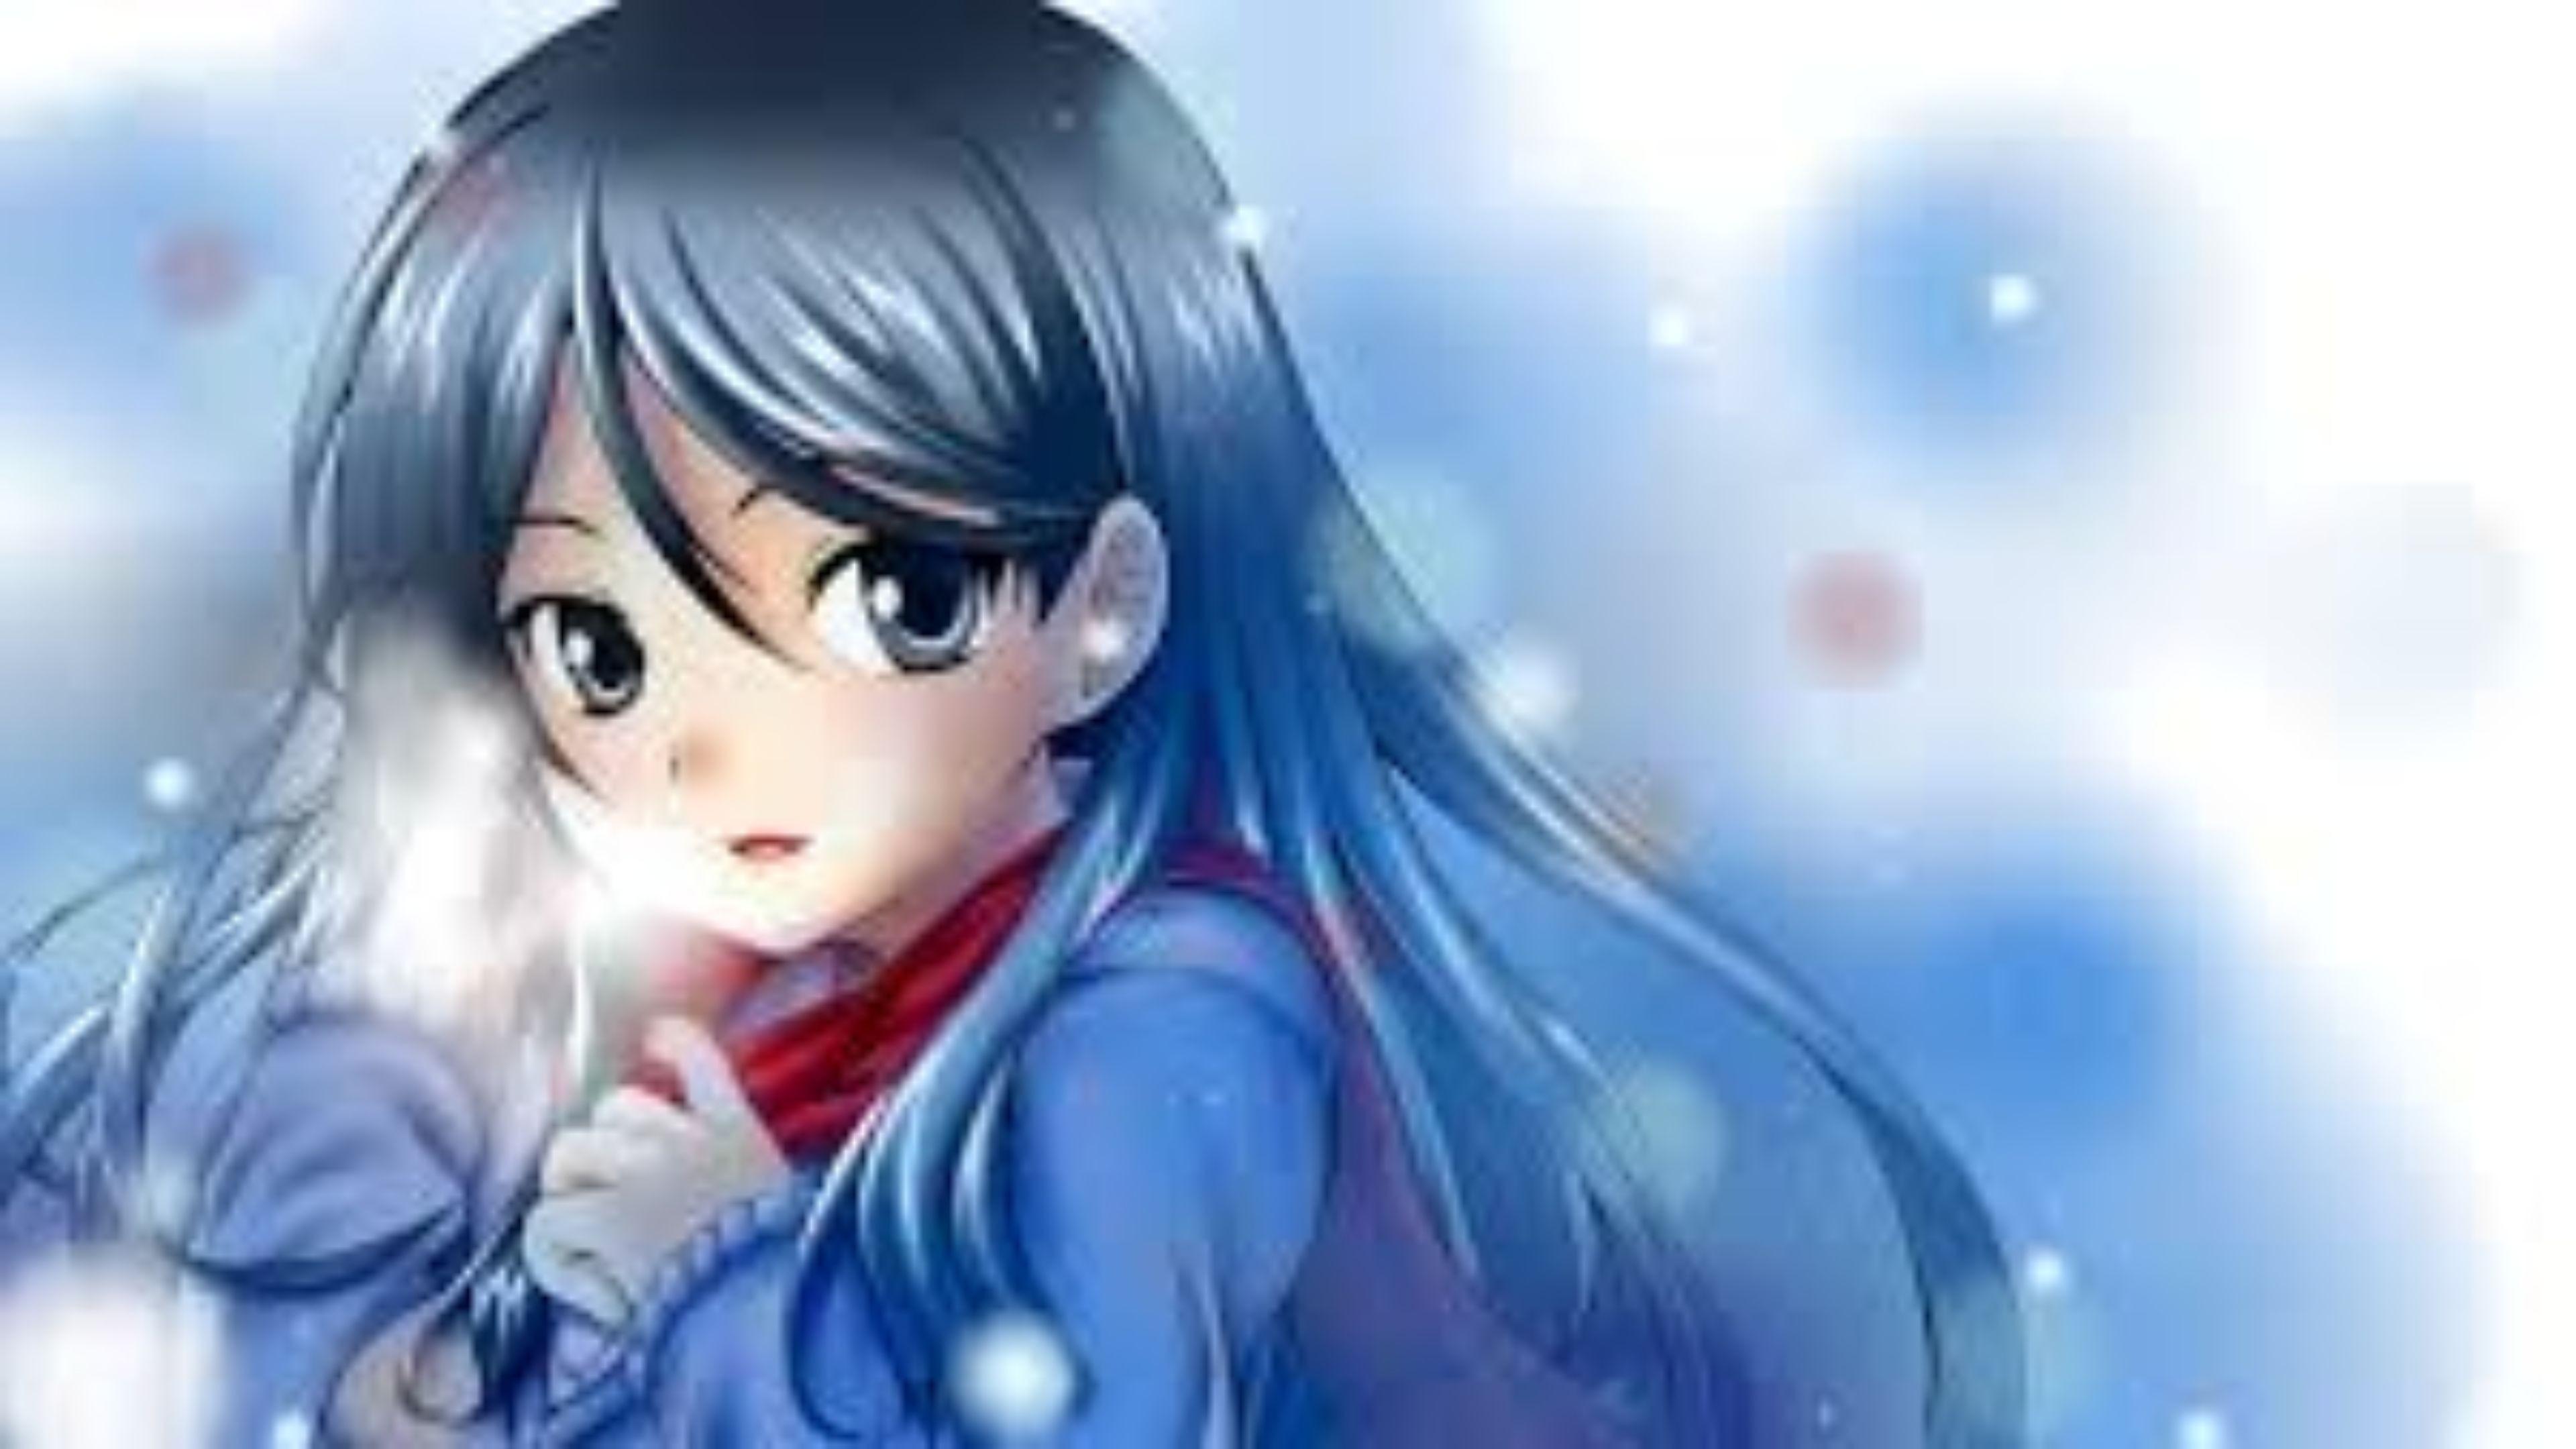 Download Original Image Anime Girl Wallpaper Hd, HD